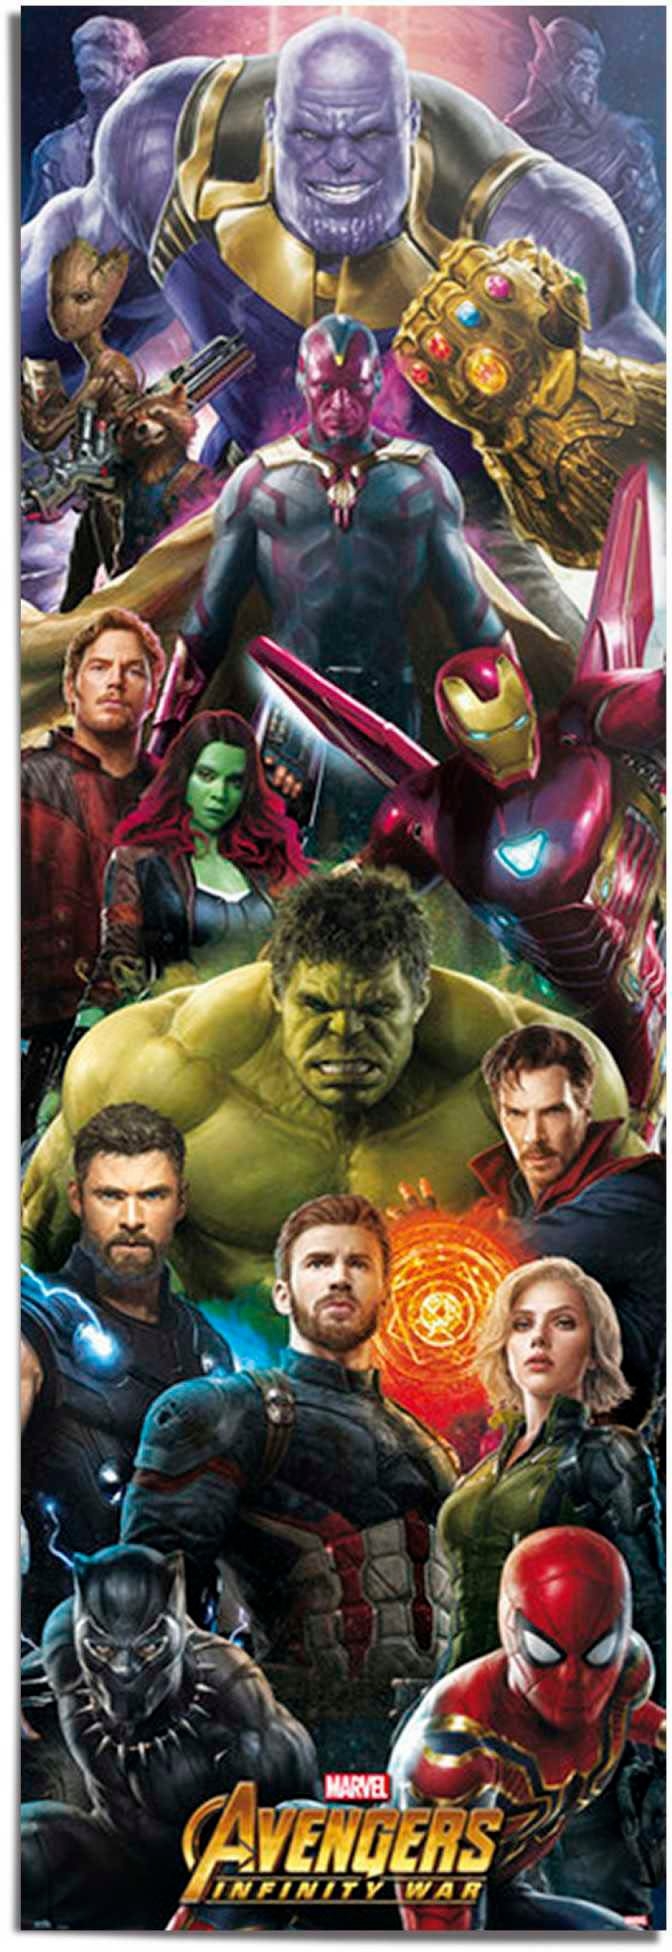 Reinders! Poster Marvel Avengers - infinity war snel gevonden | OTTO